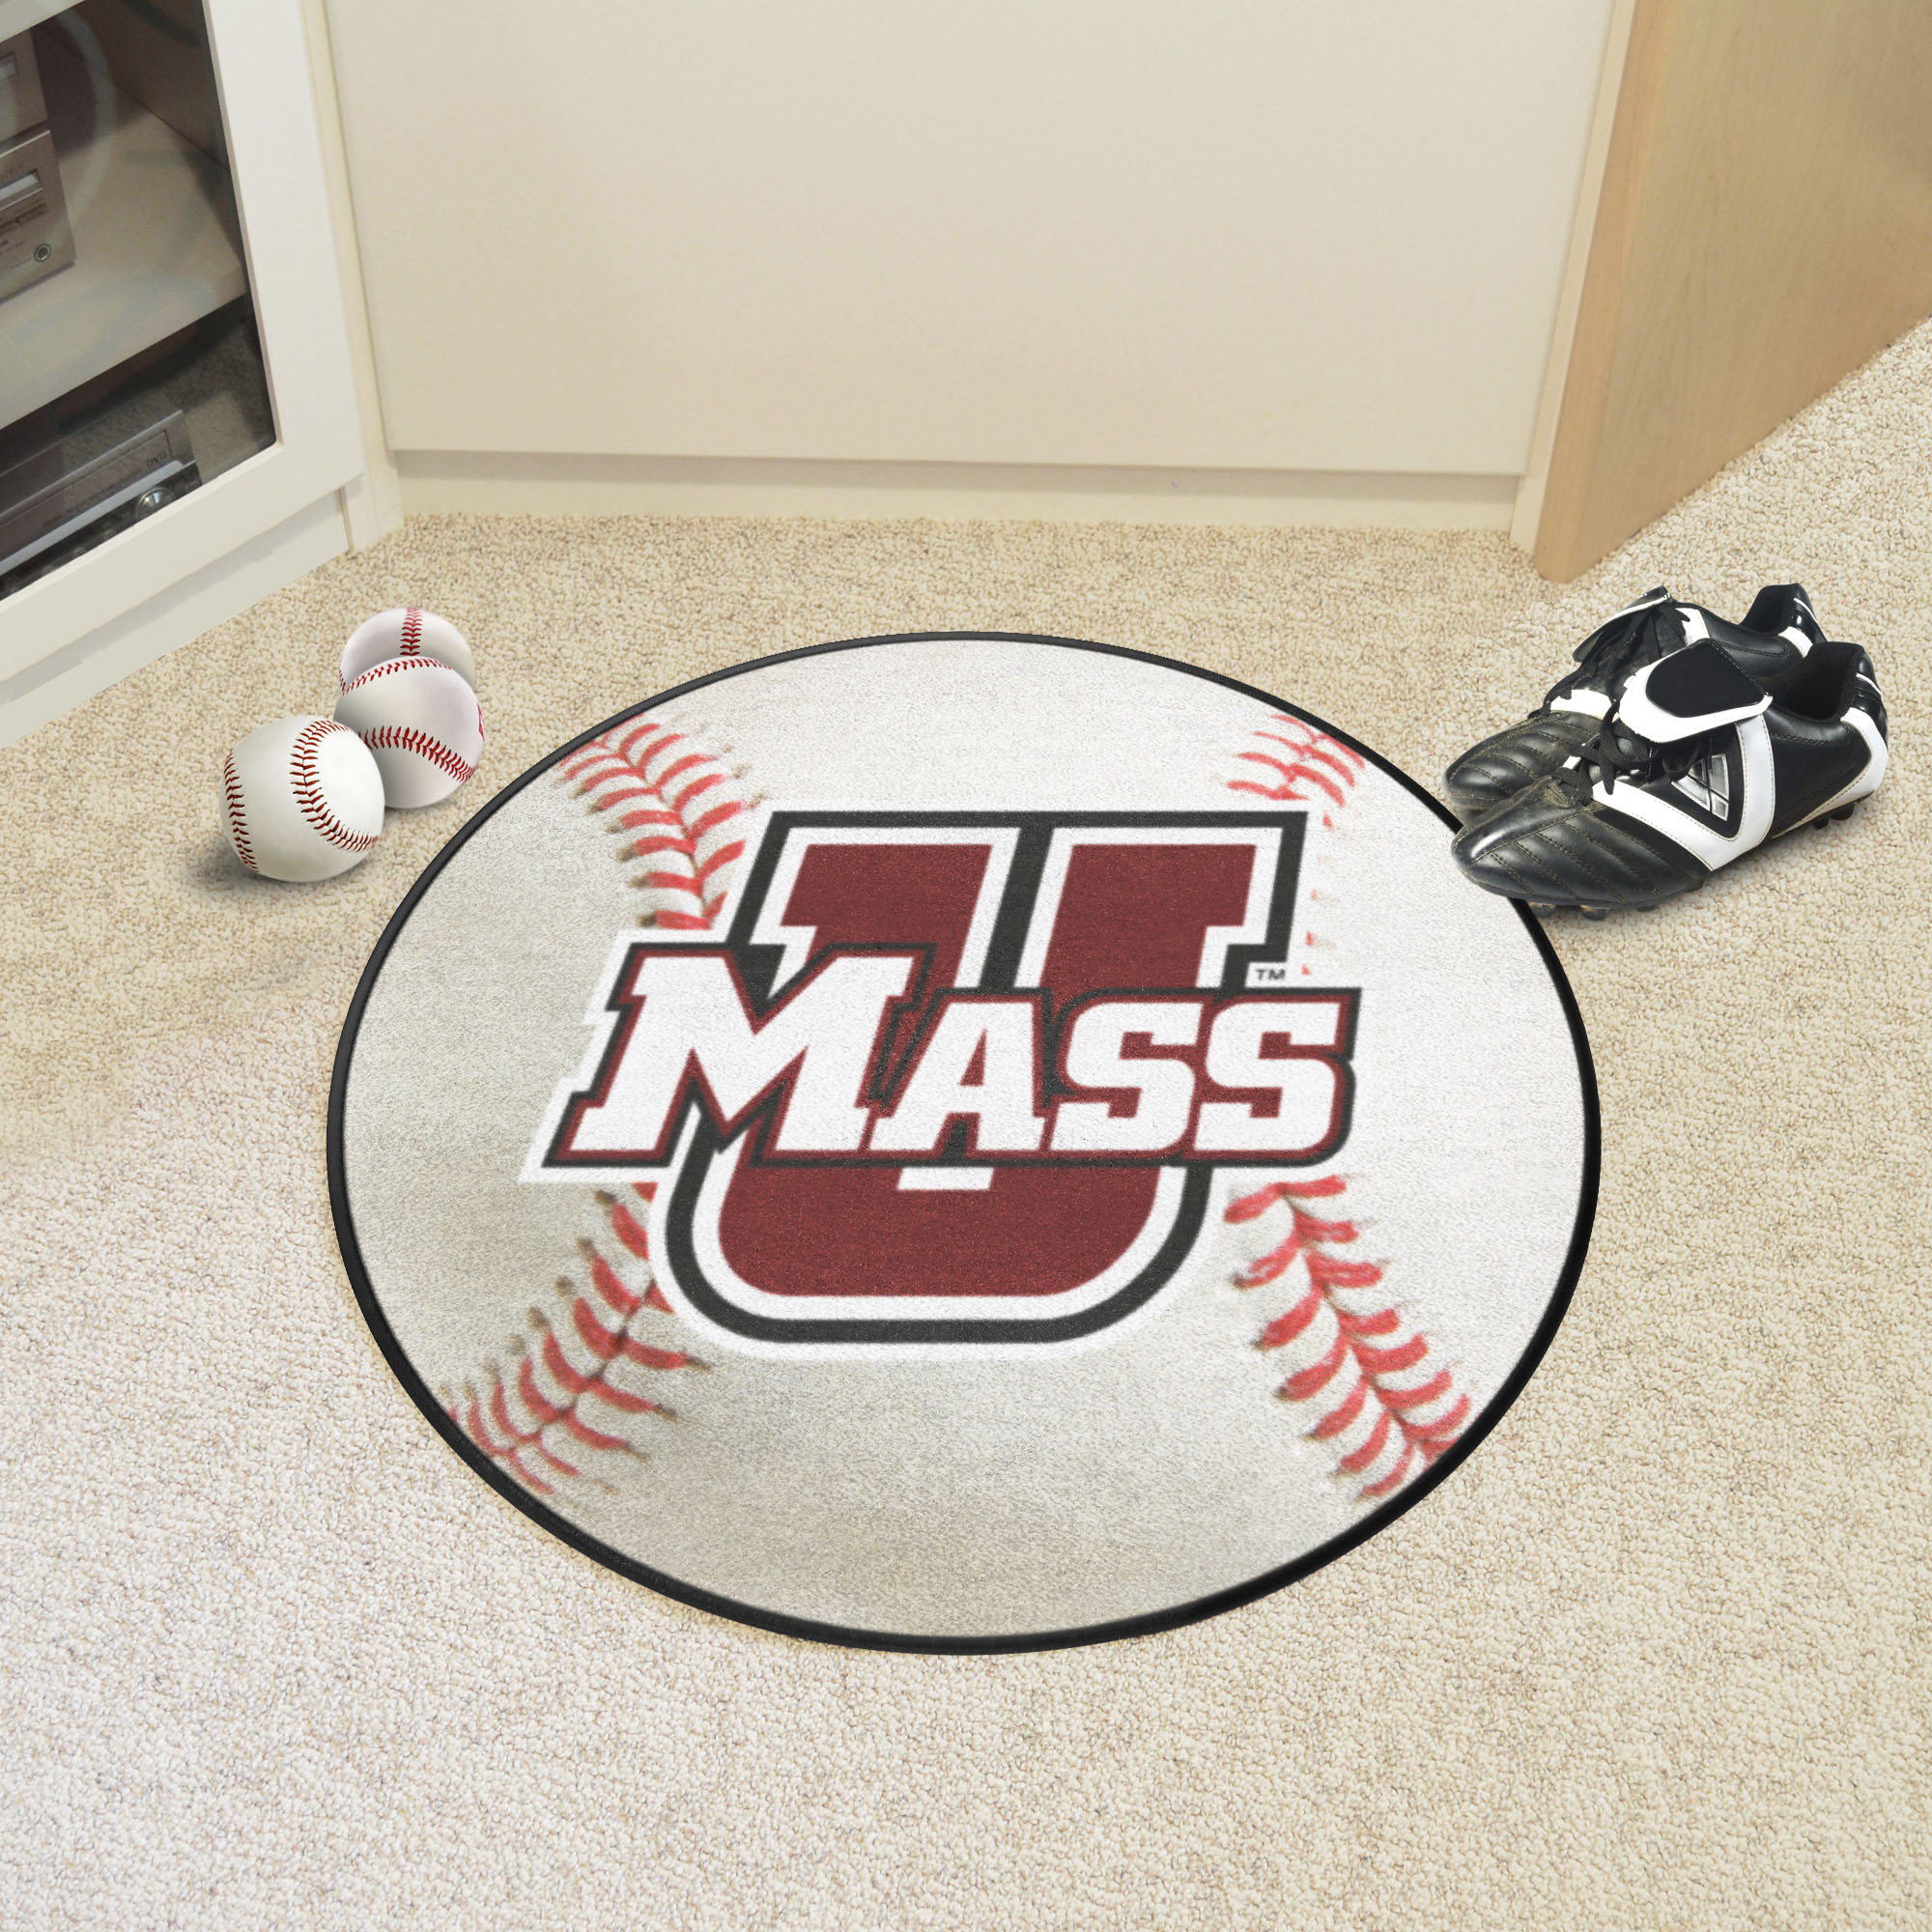 University of Massachusetts Ball Shaped Area Rugs (Ball Shaped Area Rugs: Baseball)